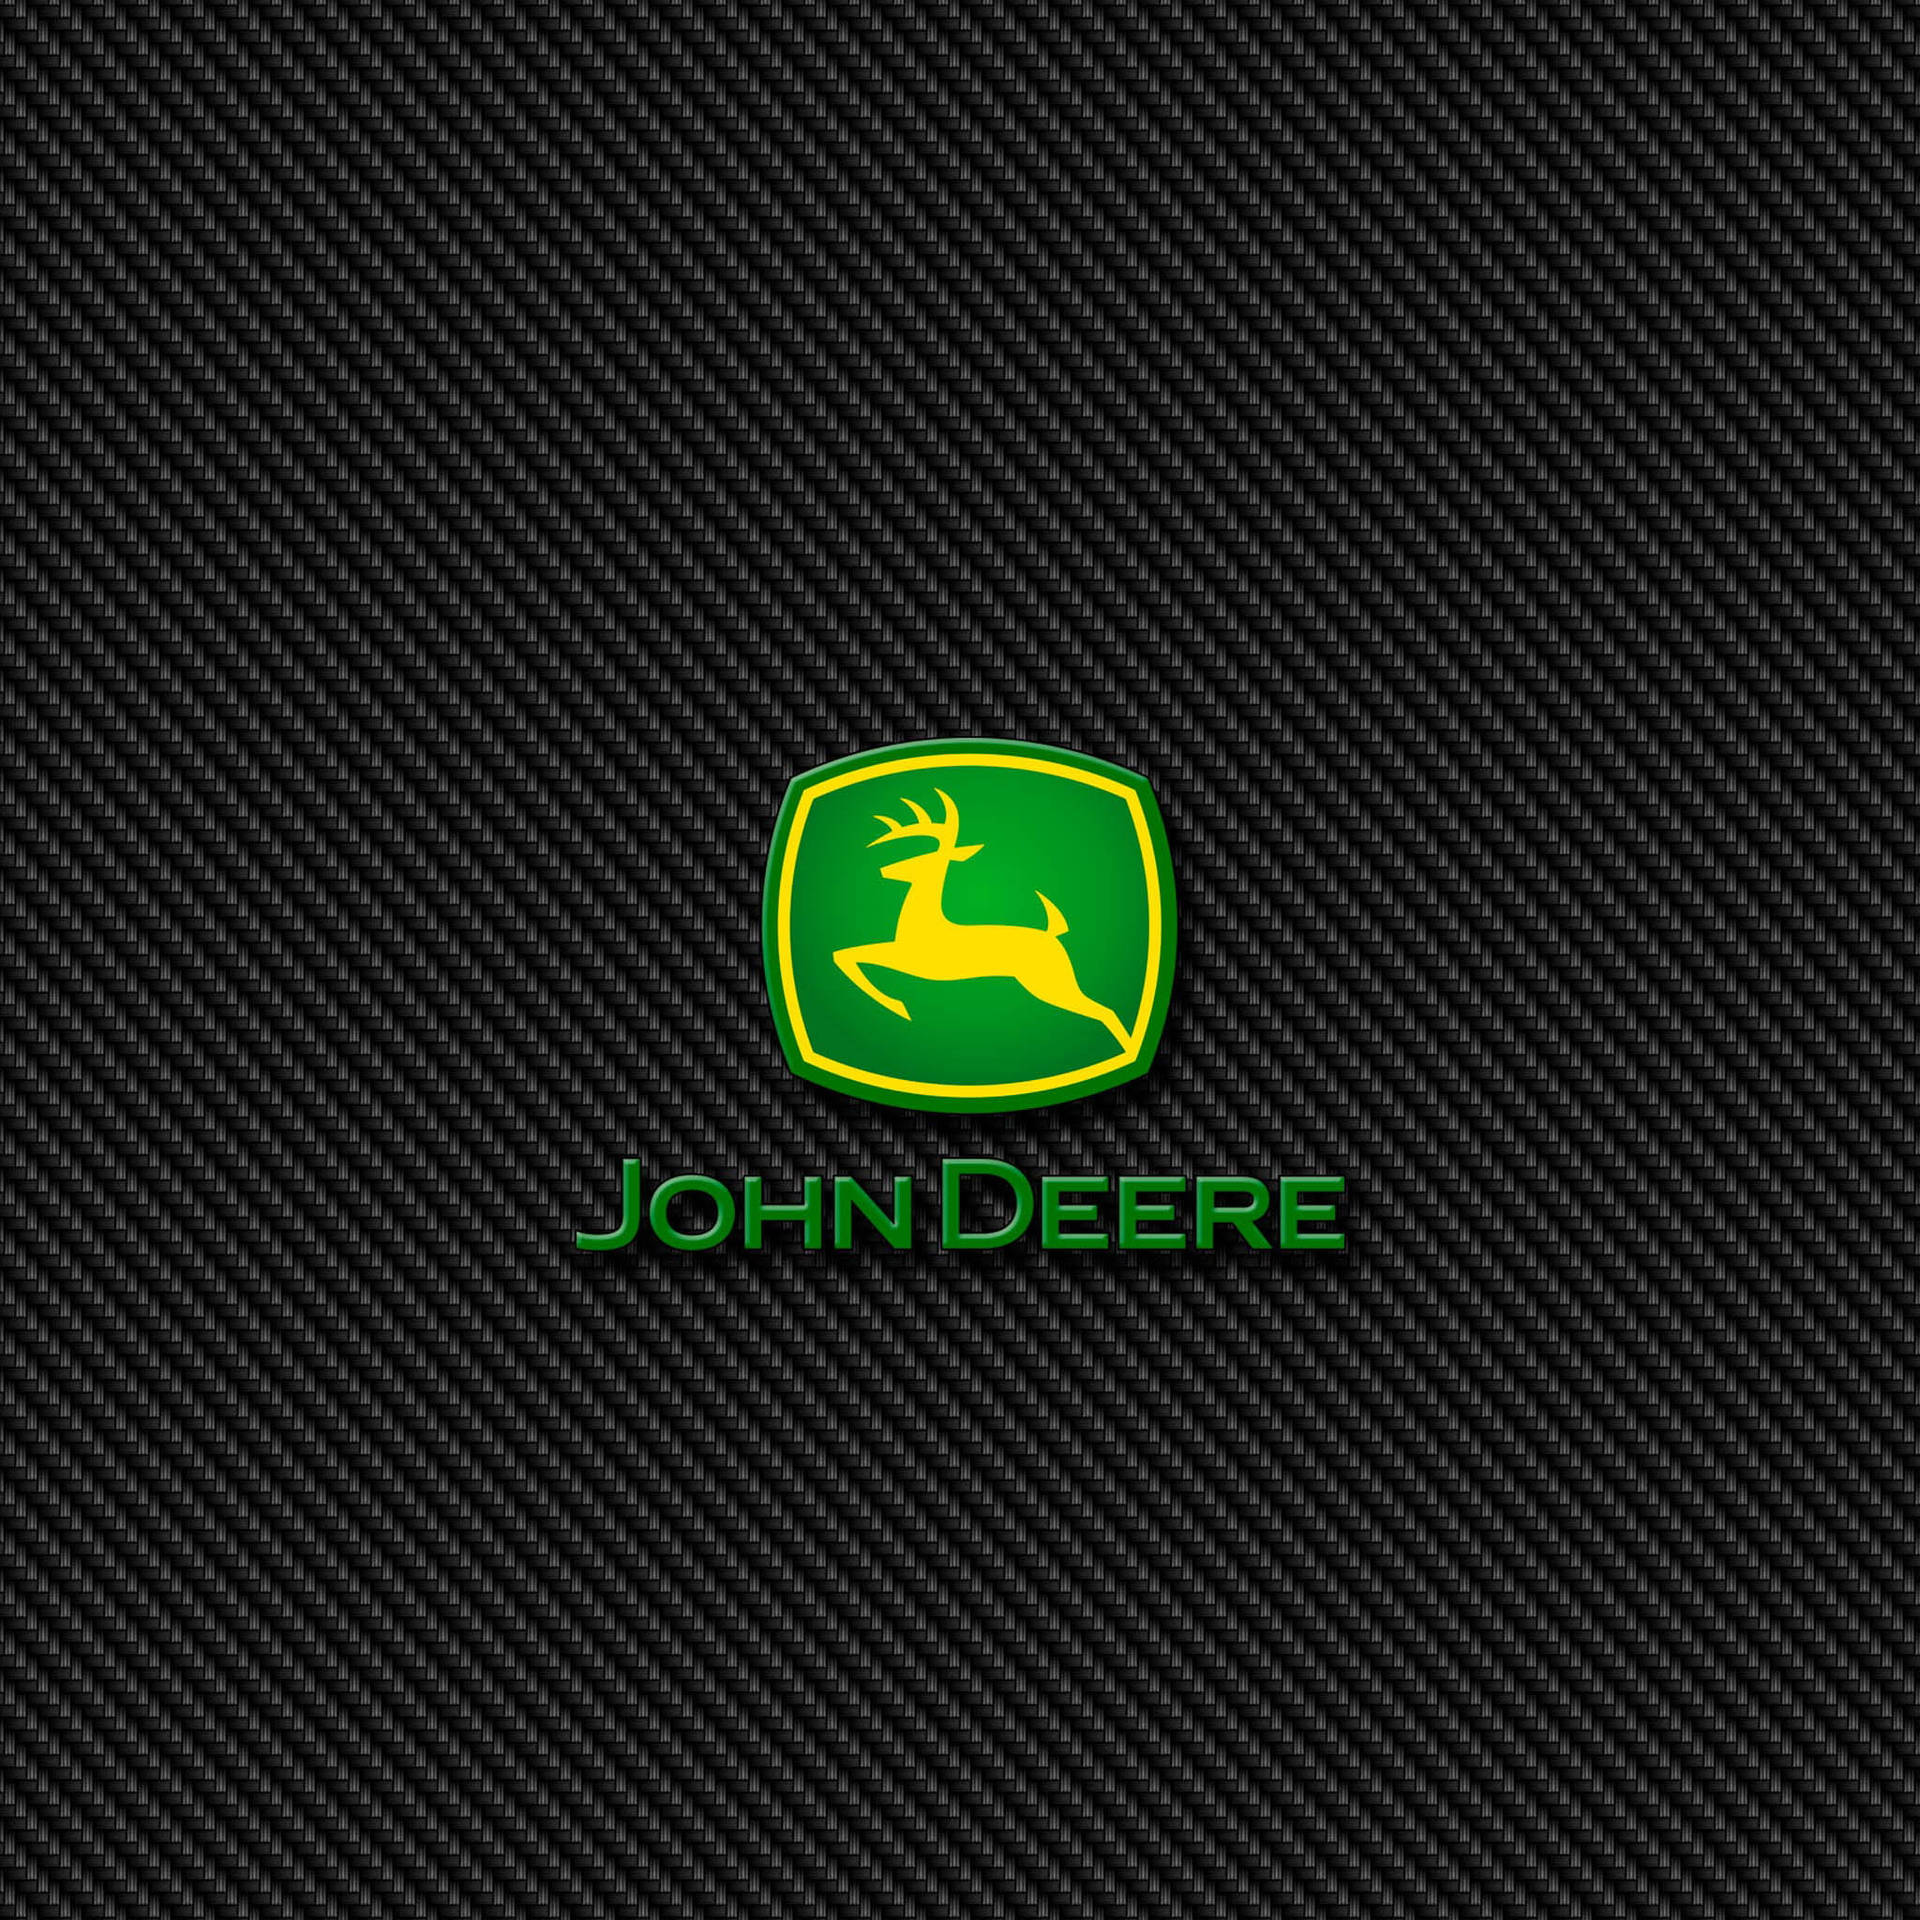 Textured John Deere Logo Background